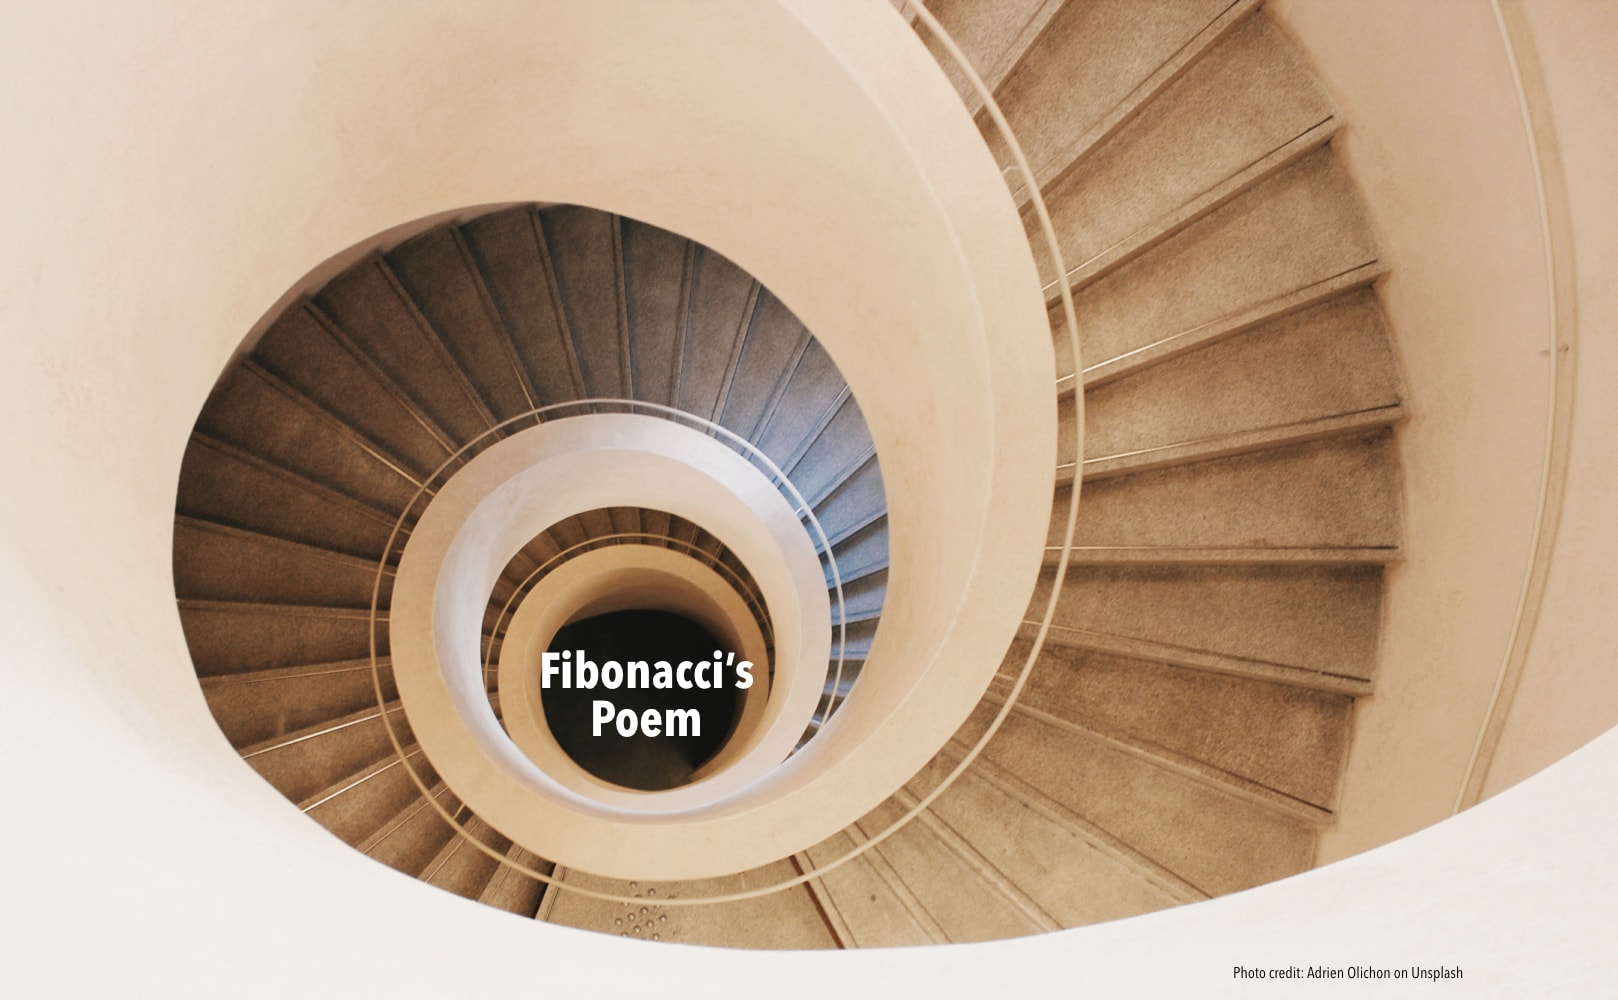 Fibonacci’s Poem